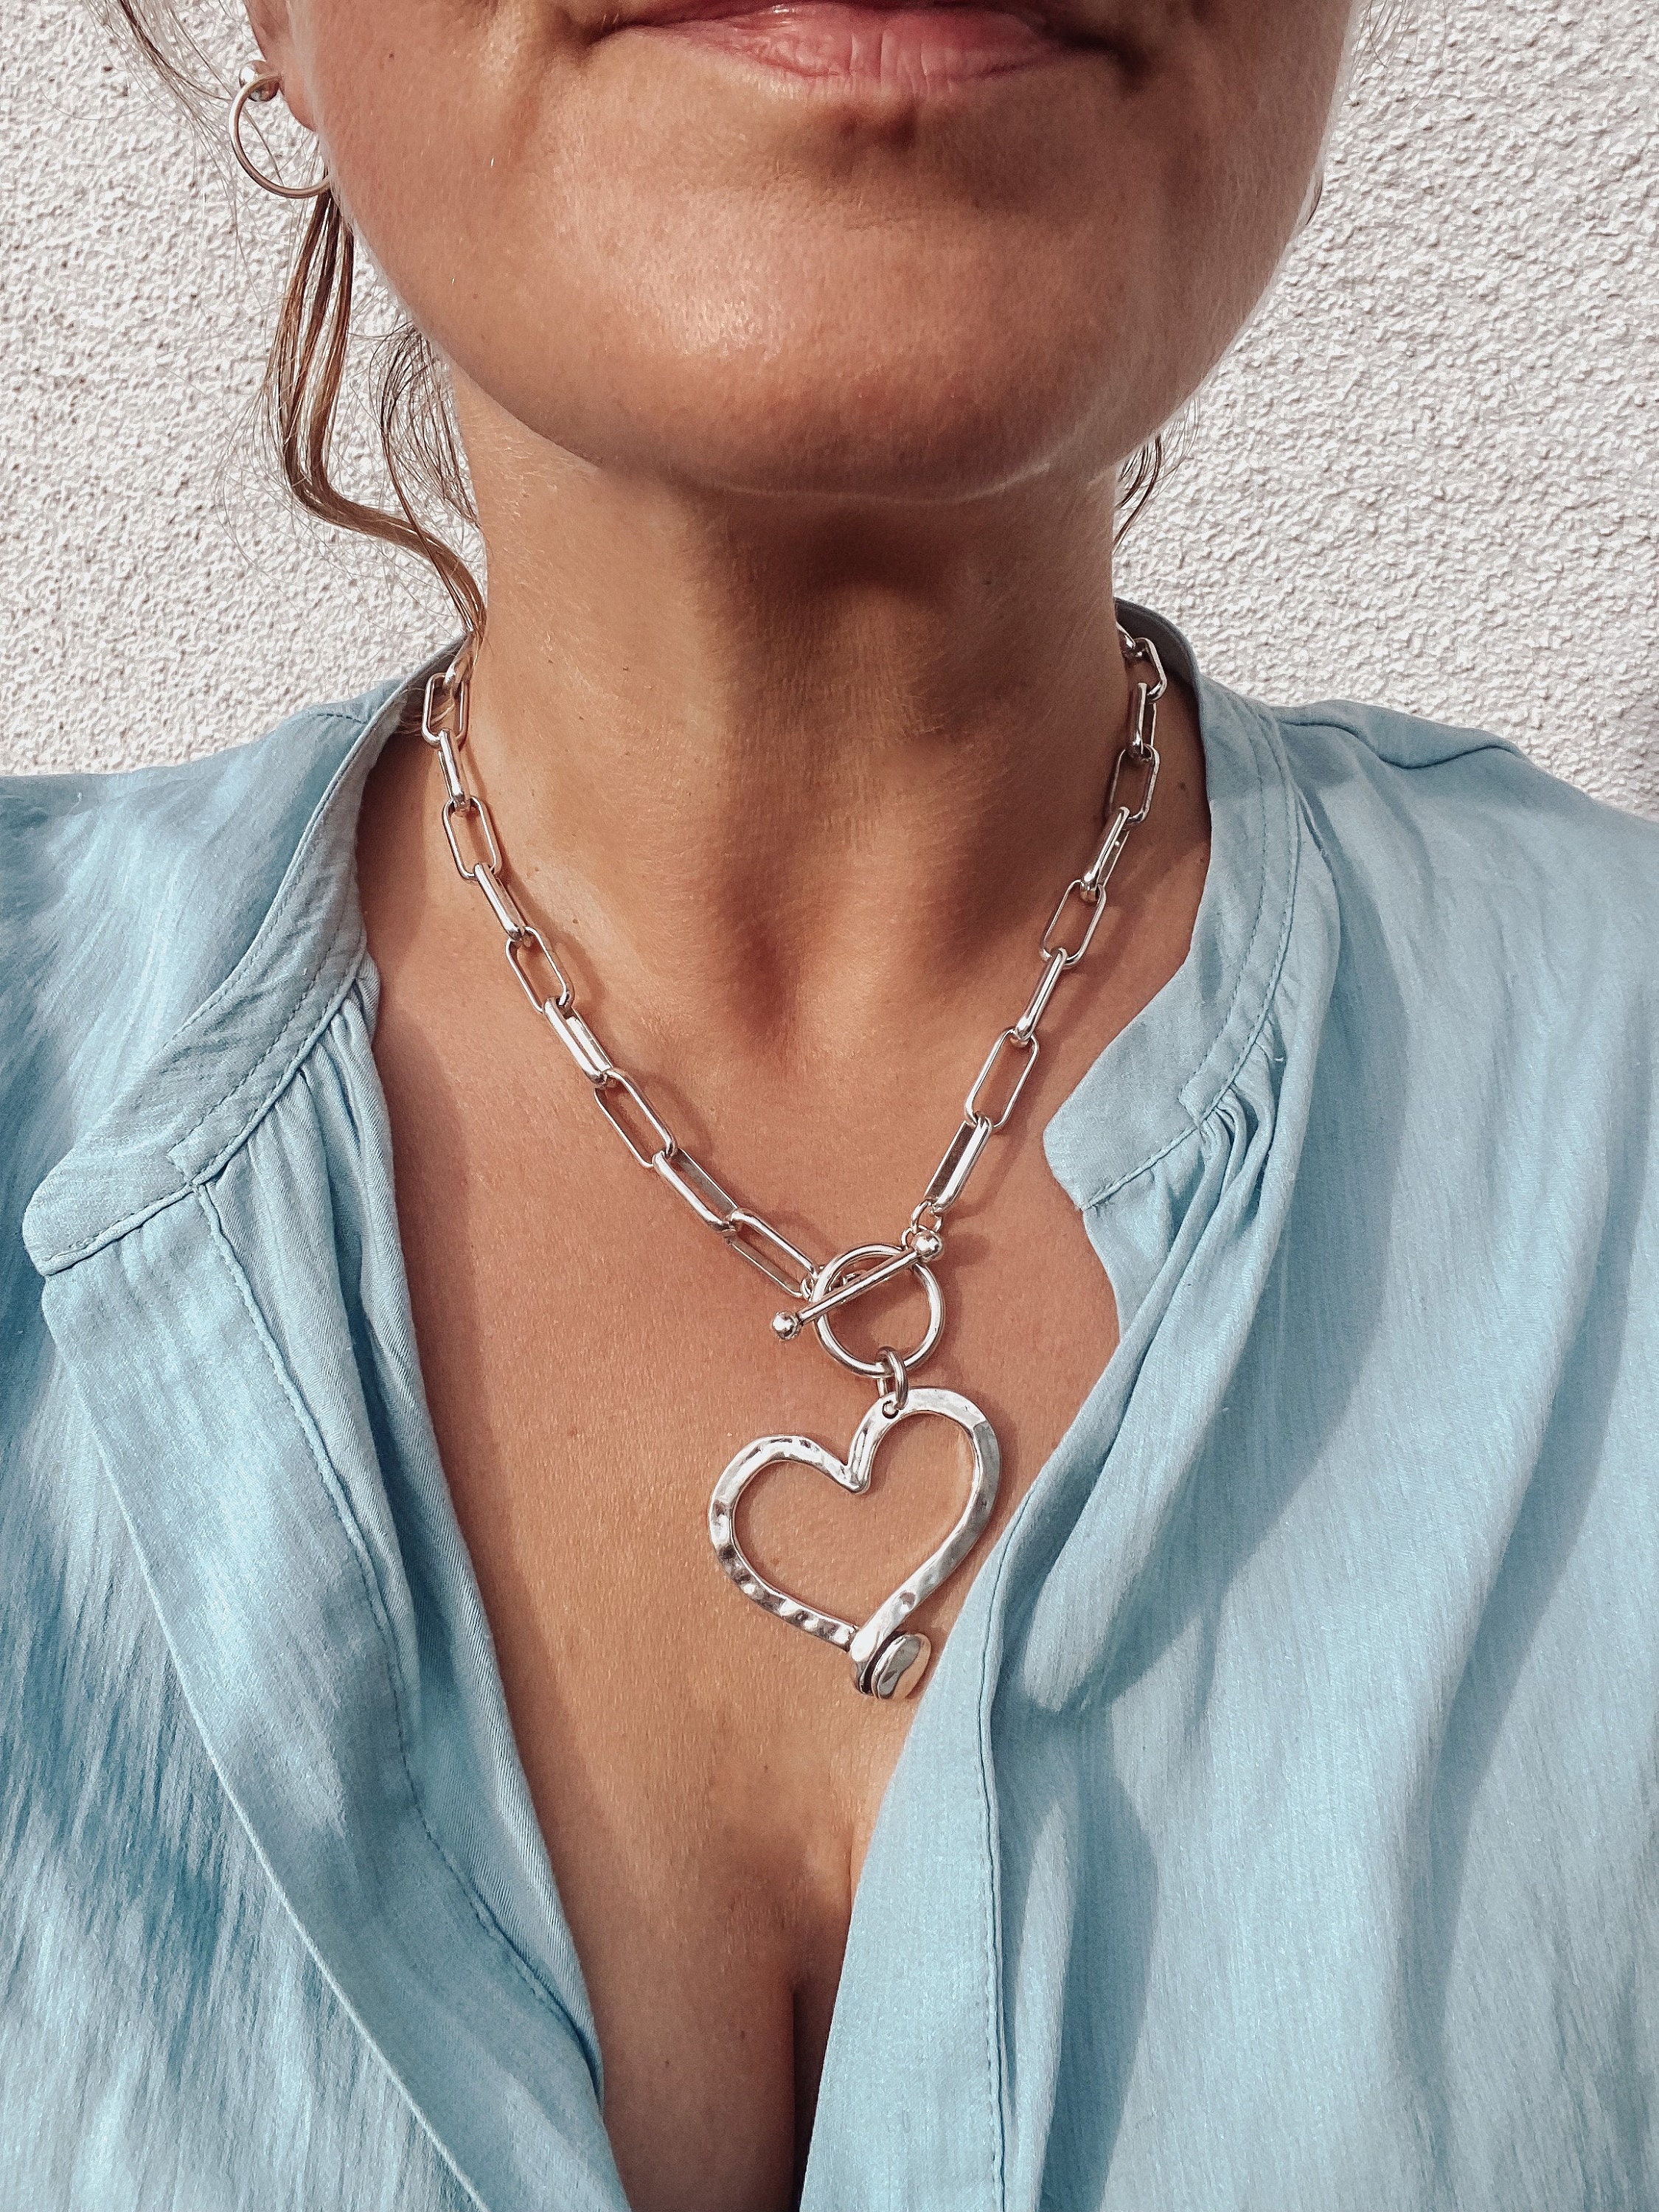 Wholesale Zinc Alloy 3 Layered Necklaces 